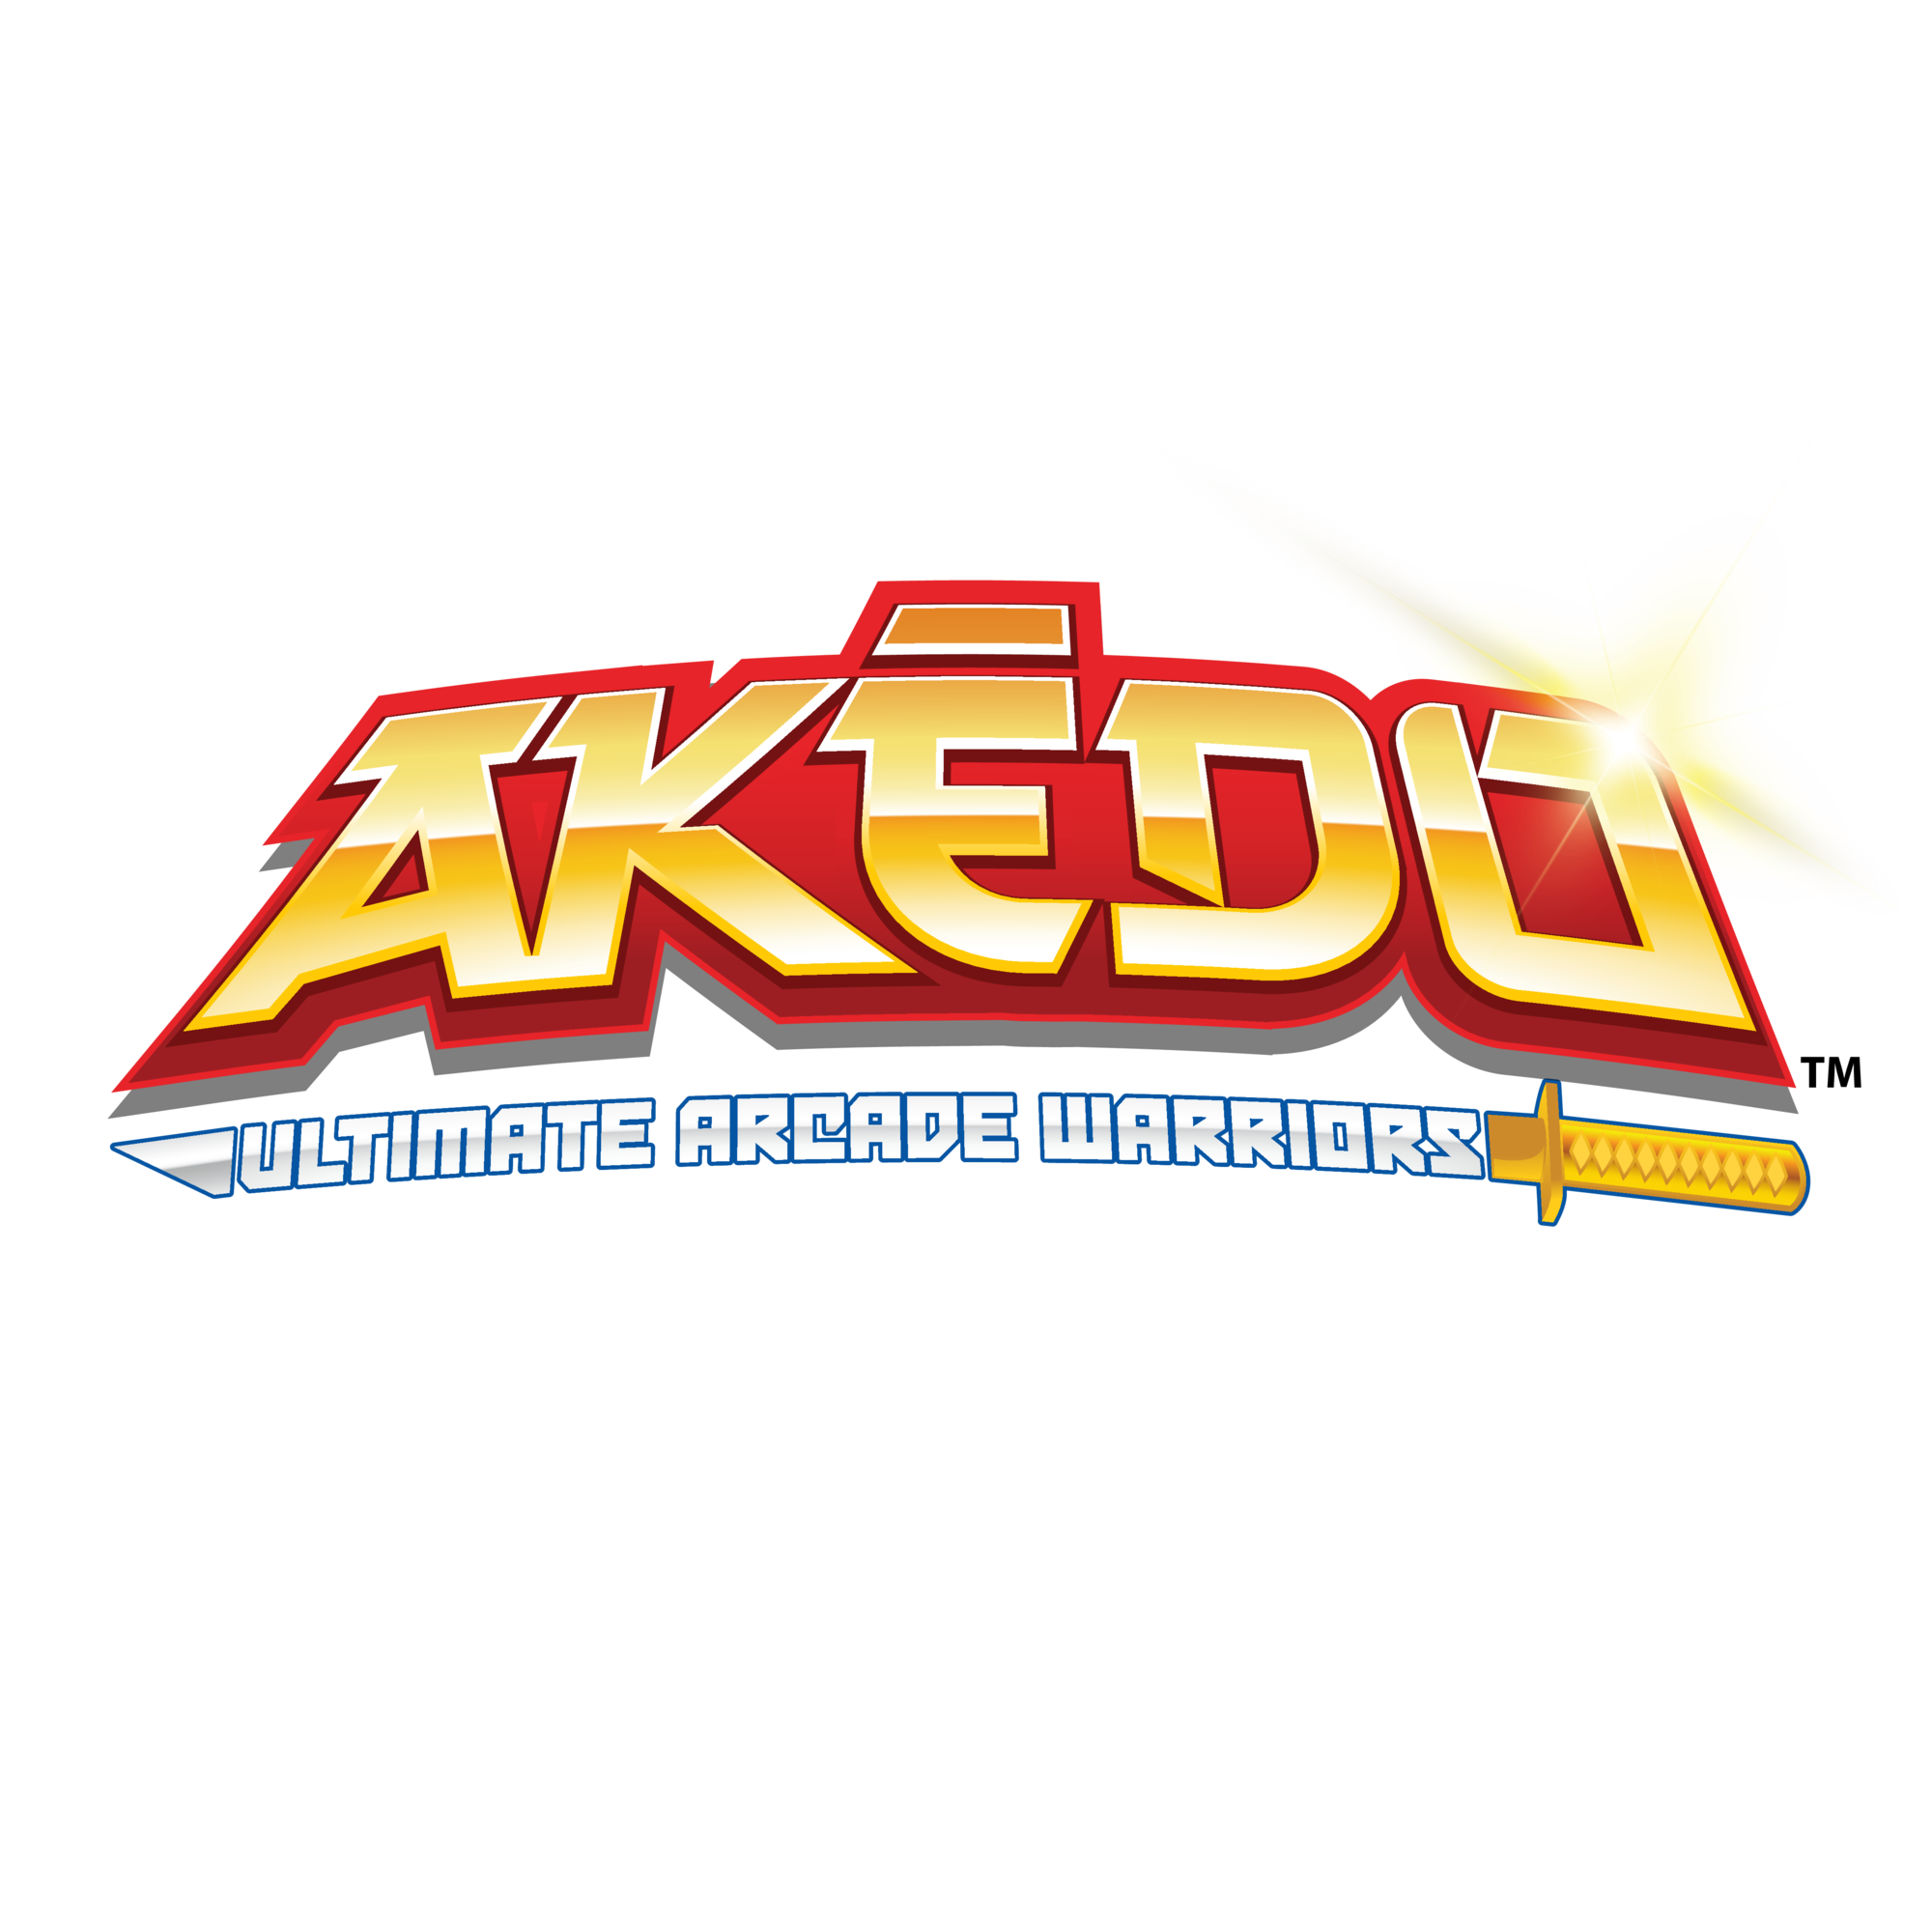 Akedo Ultimate Arcade Warriors